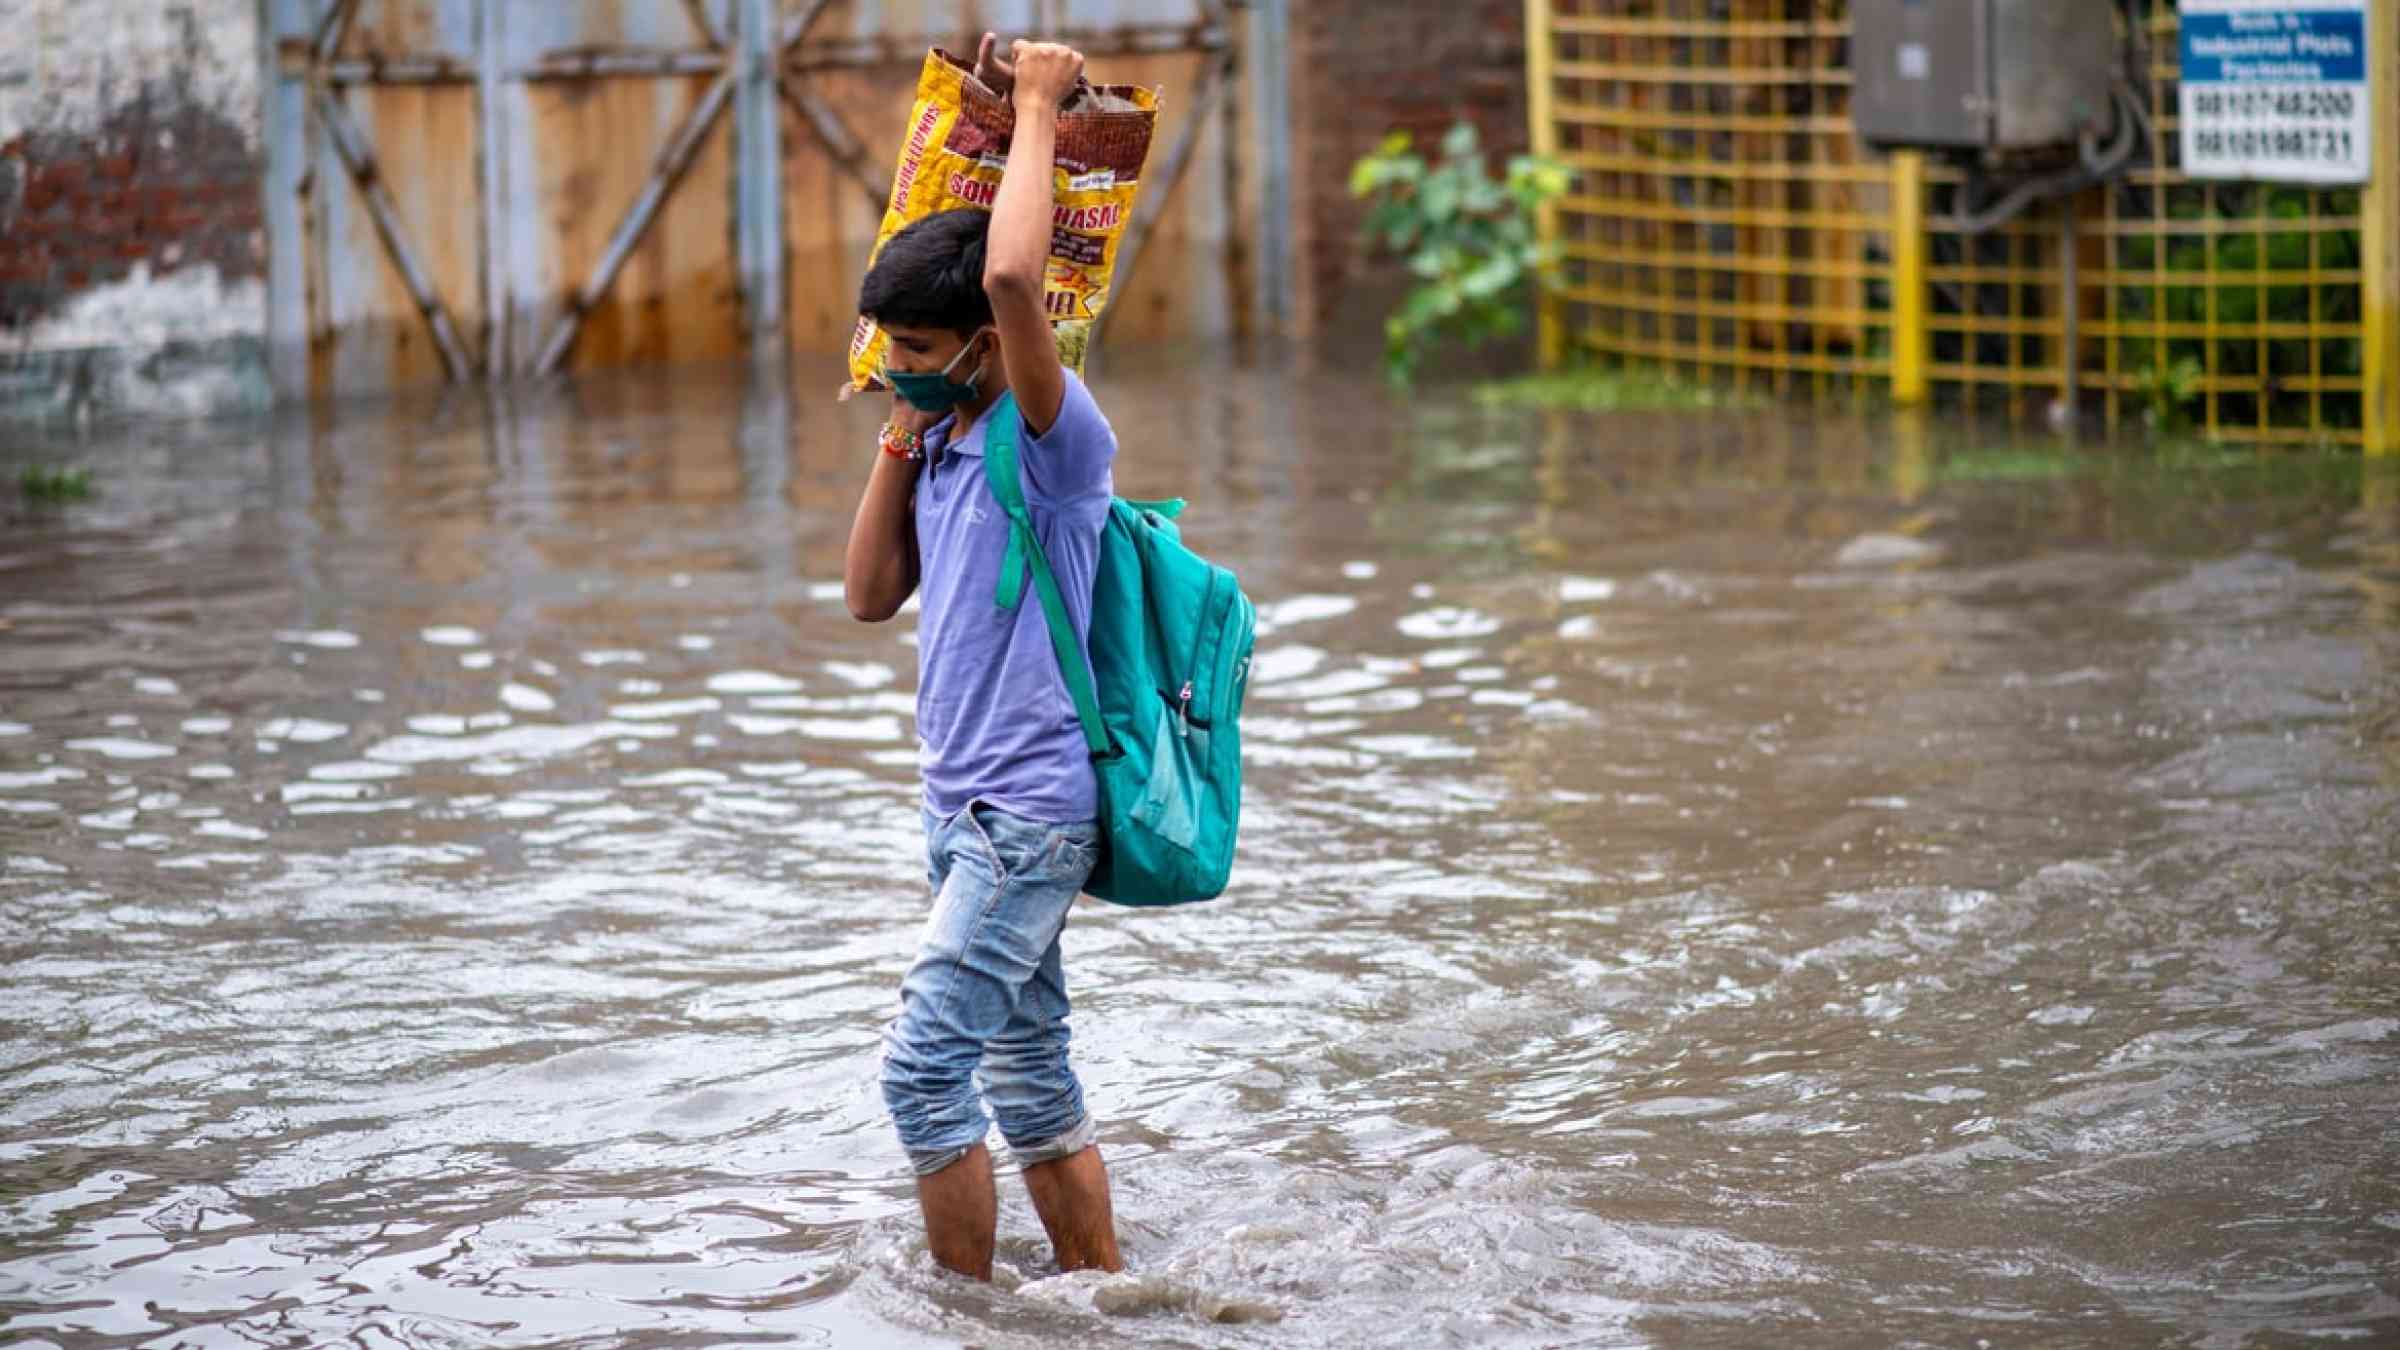 A young man walking through a flooded street in Ghaziabad, Uttar Pradesh, India (2021)